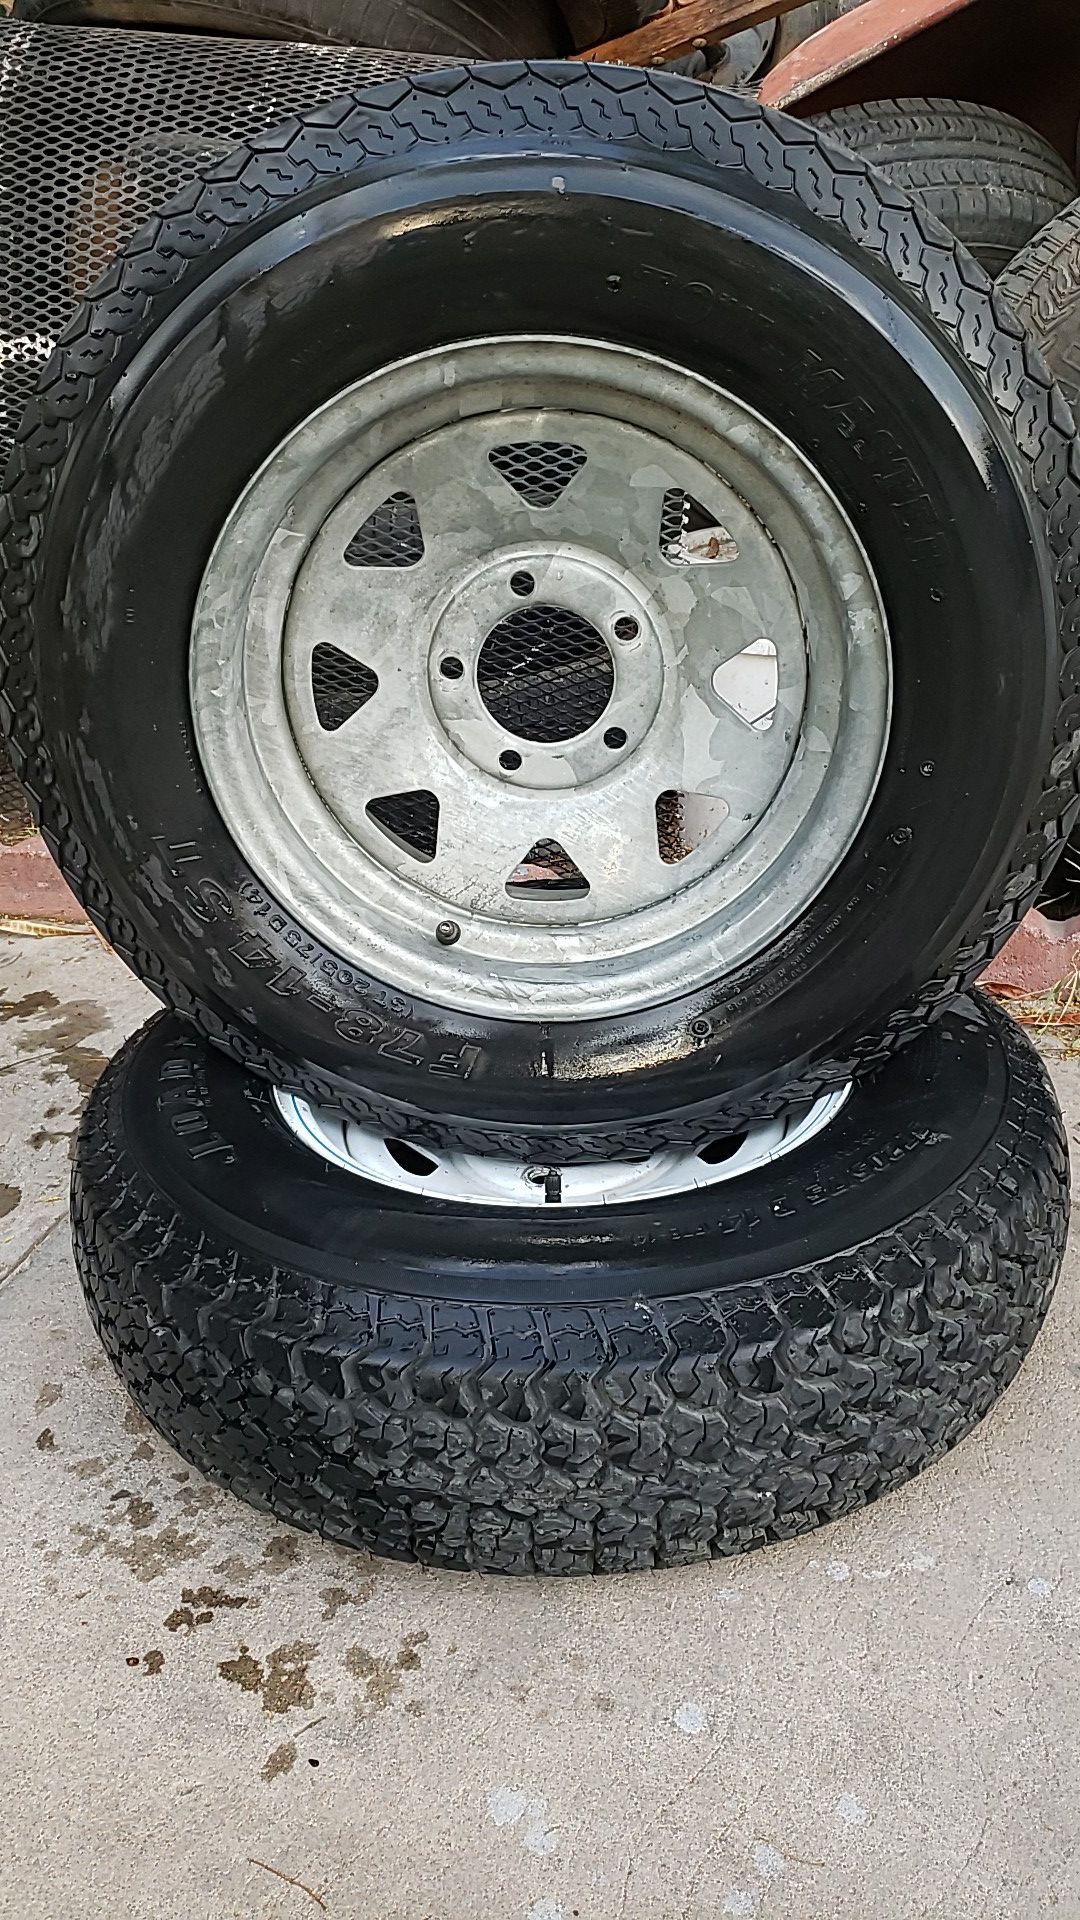 2 tires tomaster for trailer